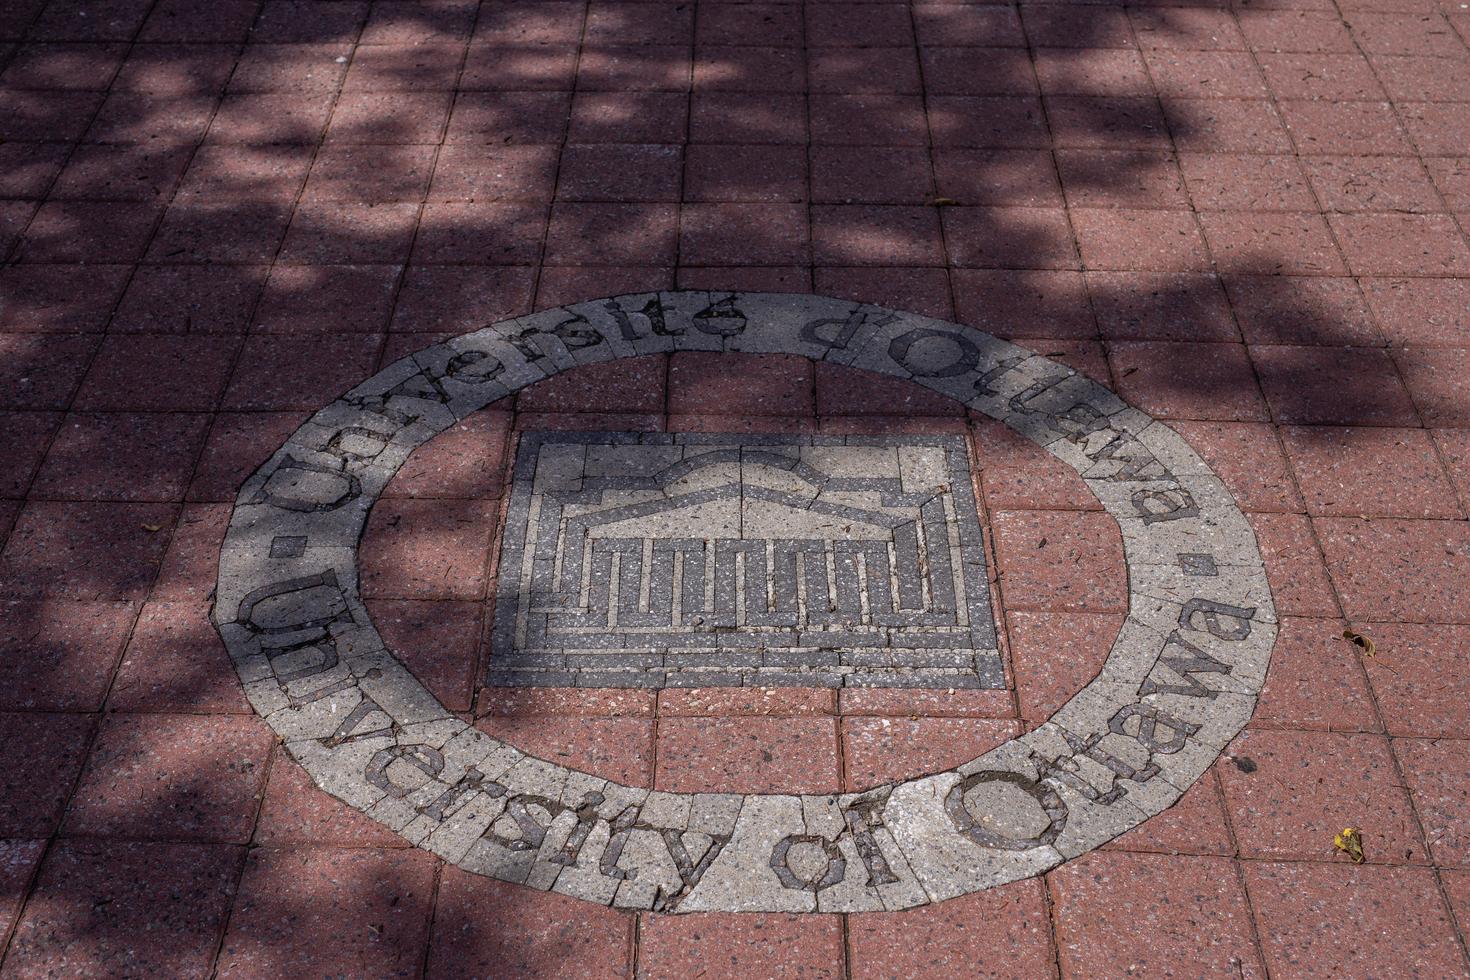 University logo on pavement